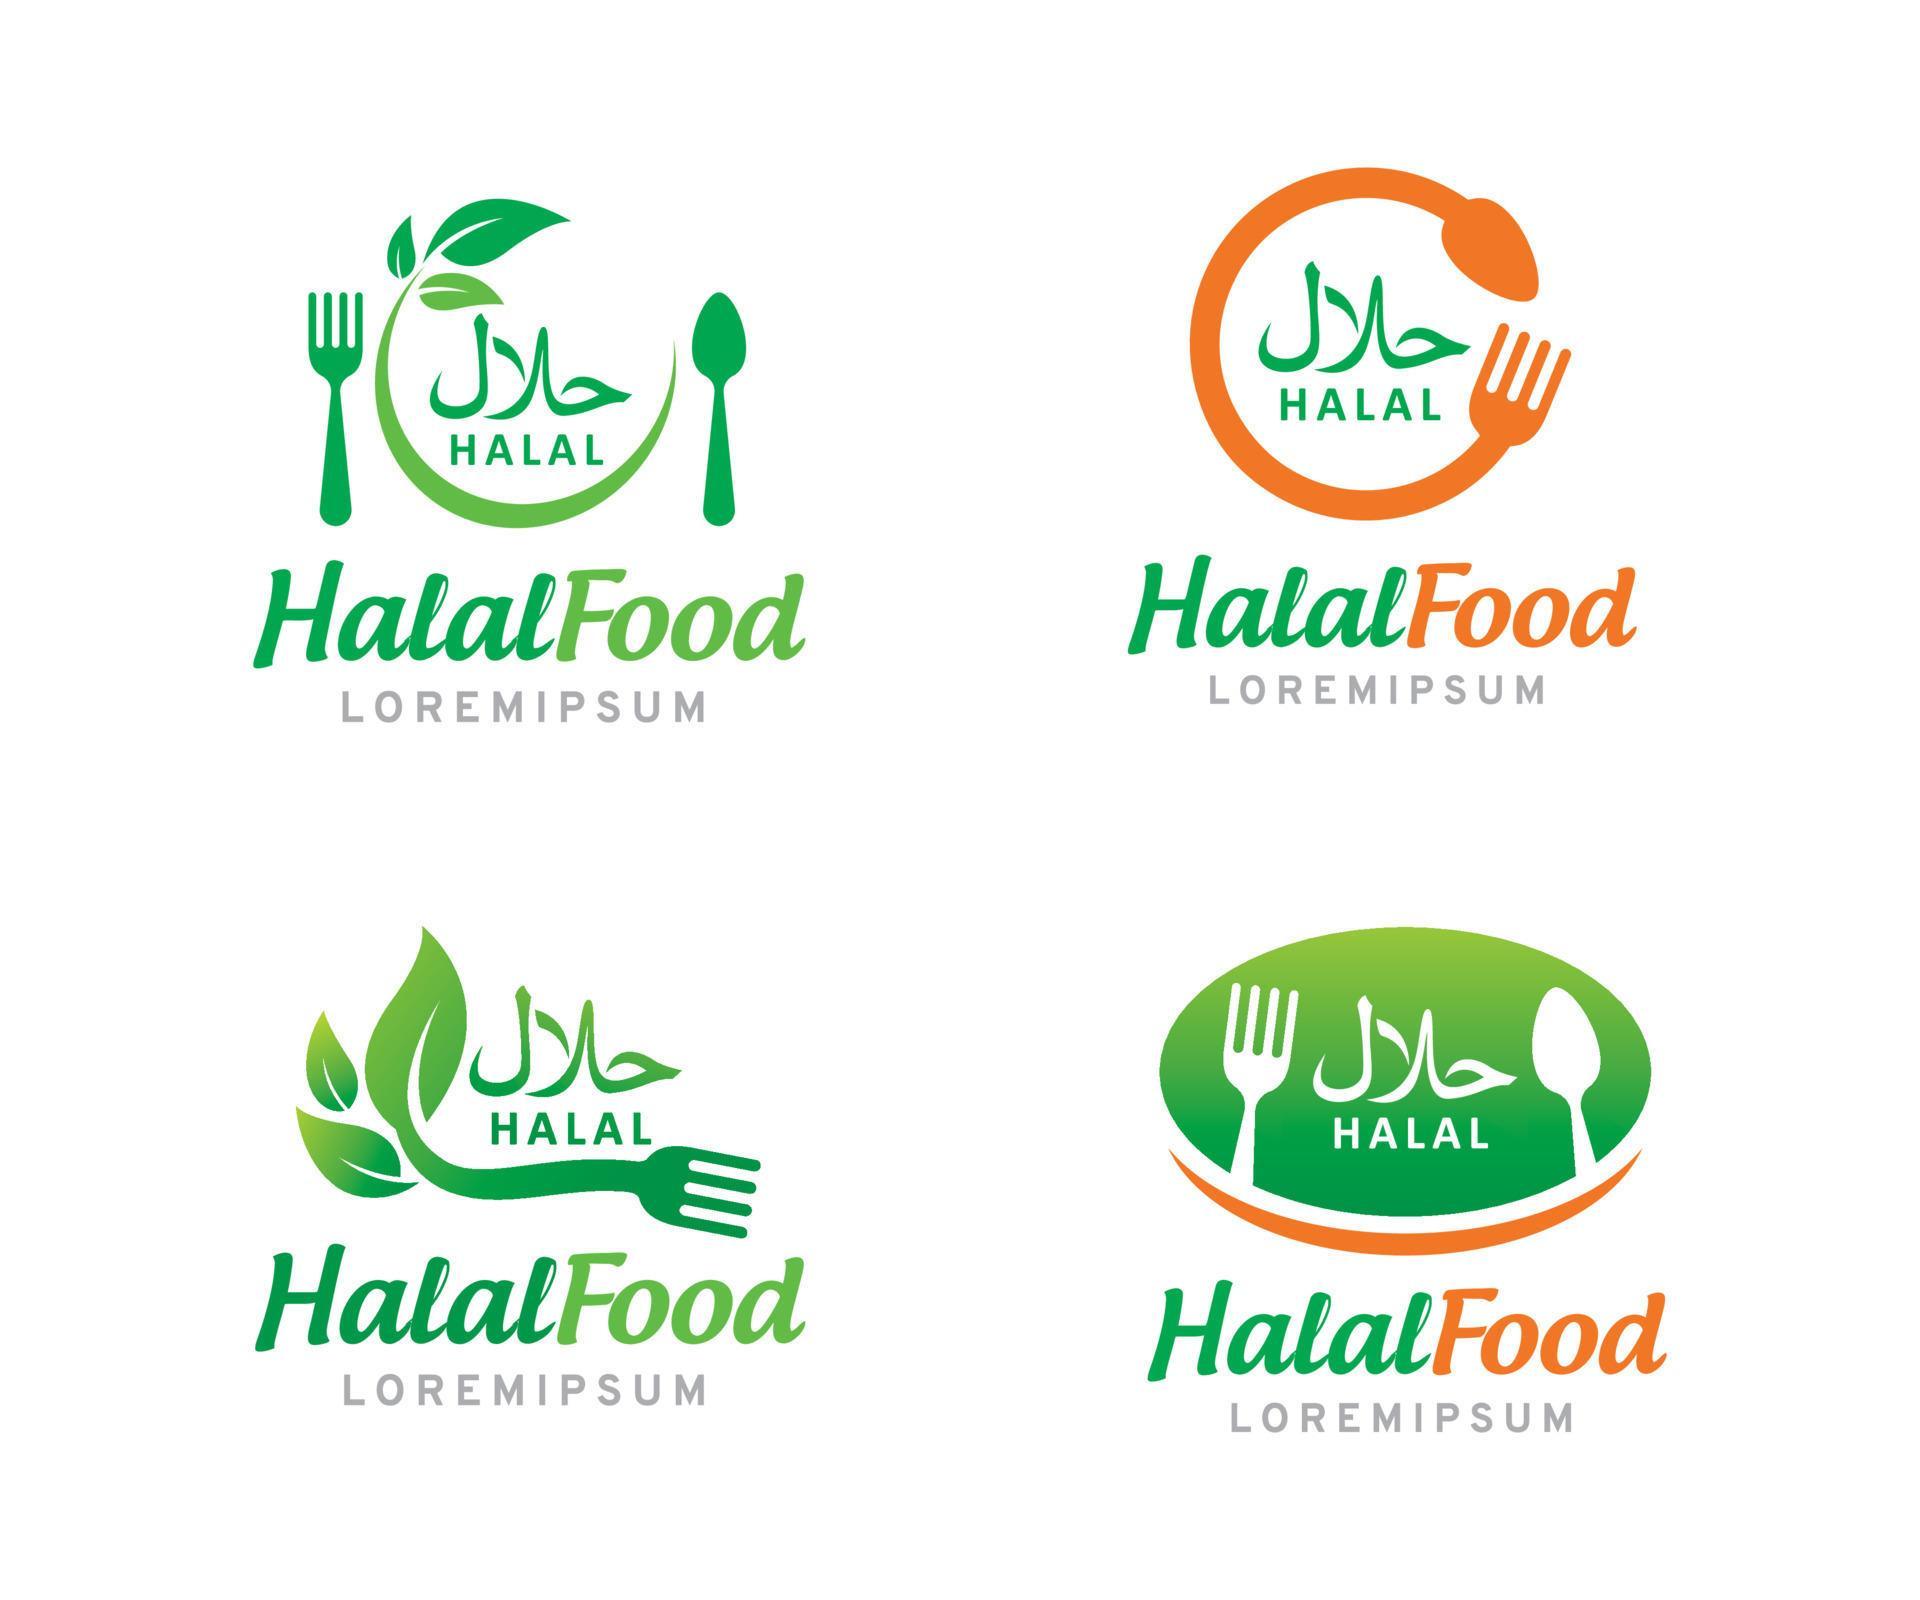 Халяль фуд. Халяль фуд лого. Символ Халяль. Halal food logo. Вектор Халяль кафе.